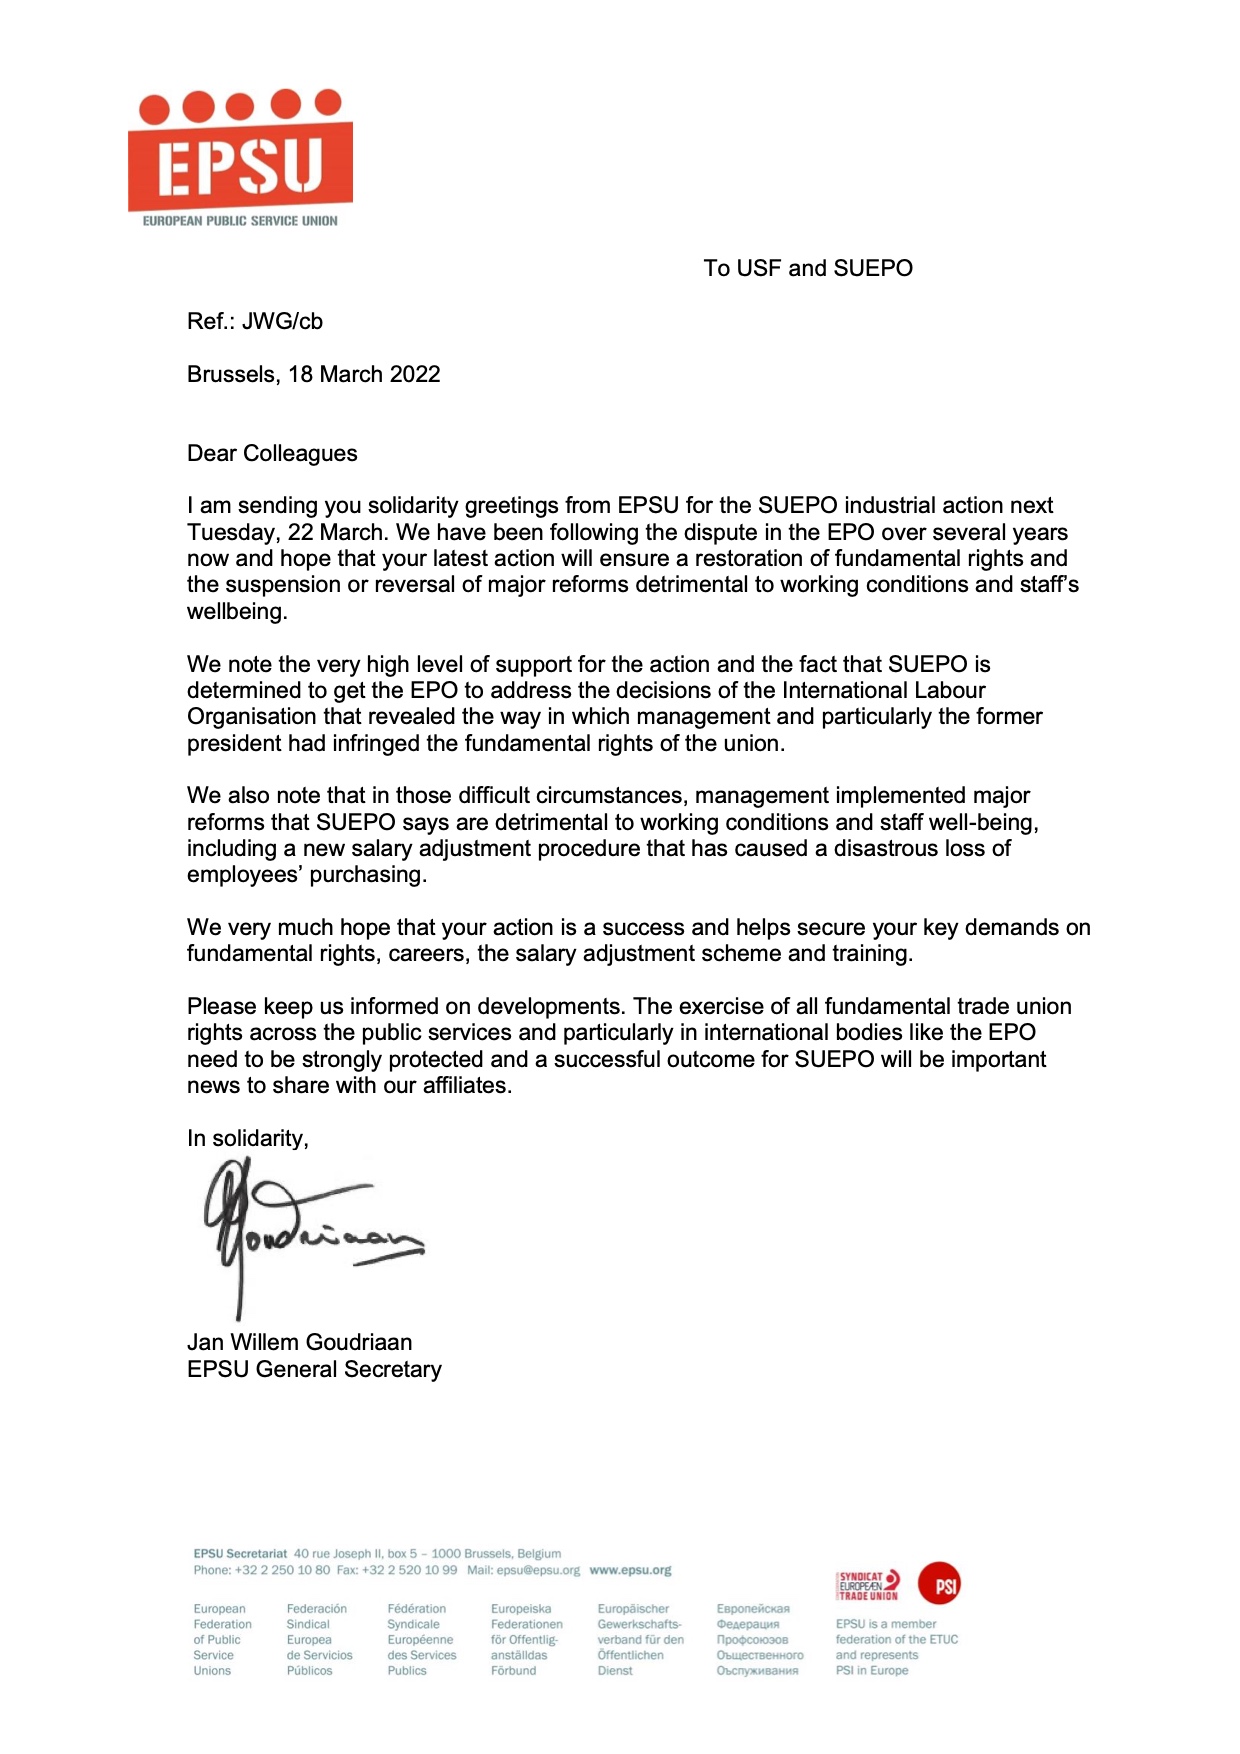 European Federation of Public Service Unions (EPSU) letter